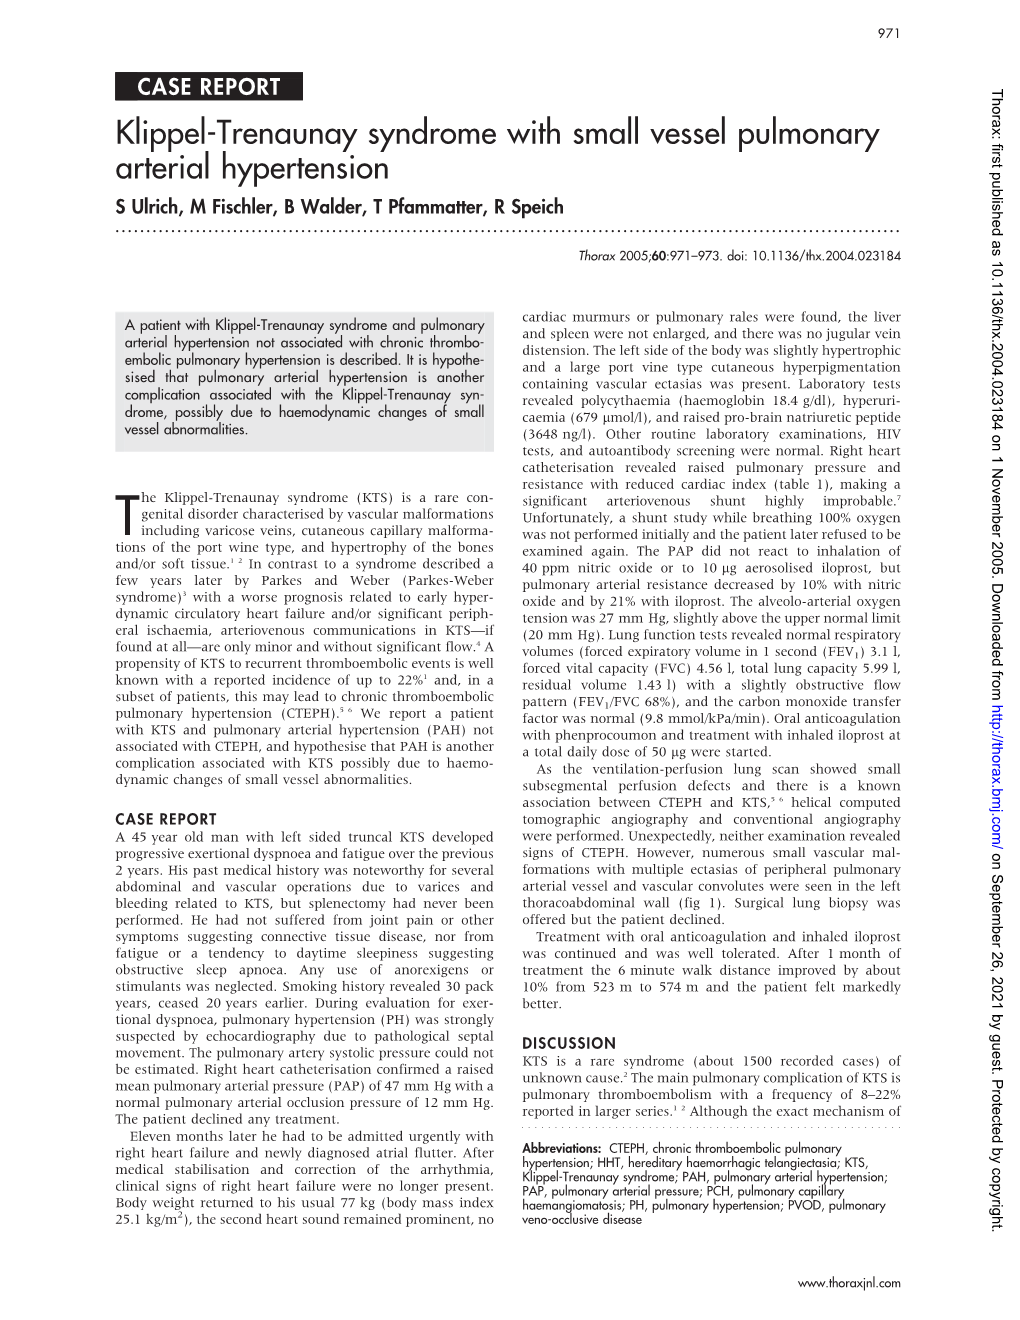 Klippel-Trenaunay Syndrome with Small Vessel Pulmonary Arterial Hypertension S Ulrich, M Fischler, B Walder, T Pfammatter, R Speich